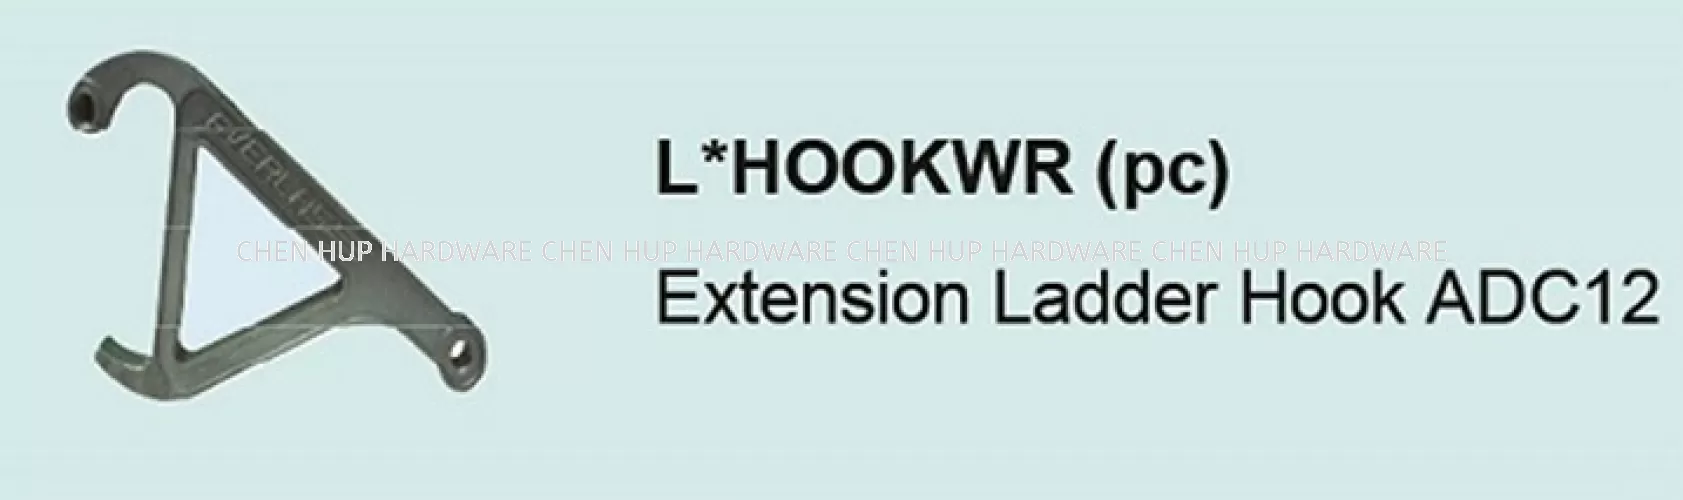 L HOOKWR (pc) - Extension Ladder Hook ADC12